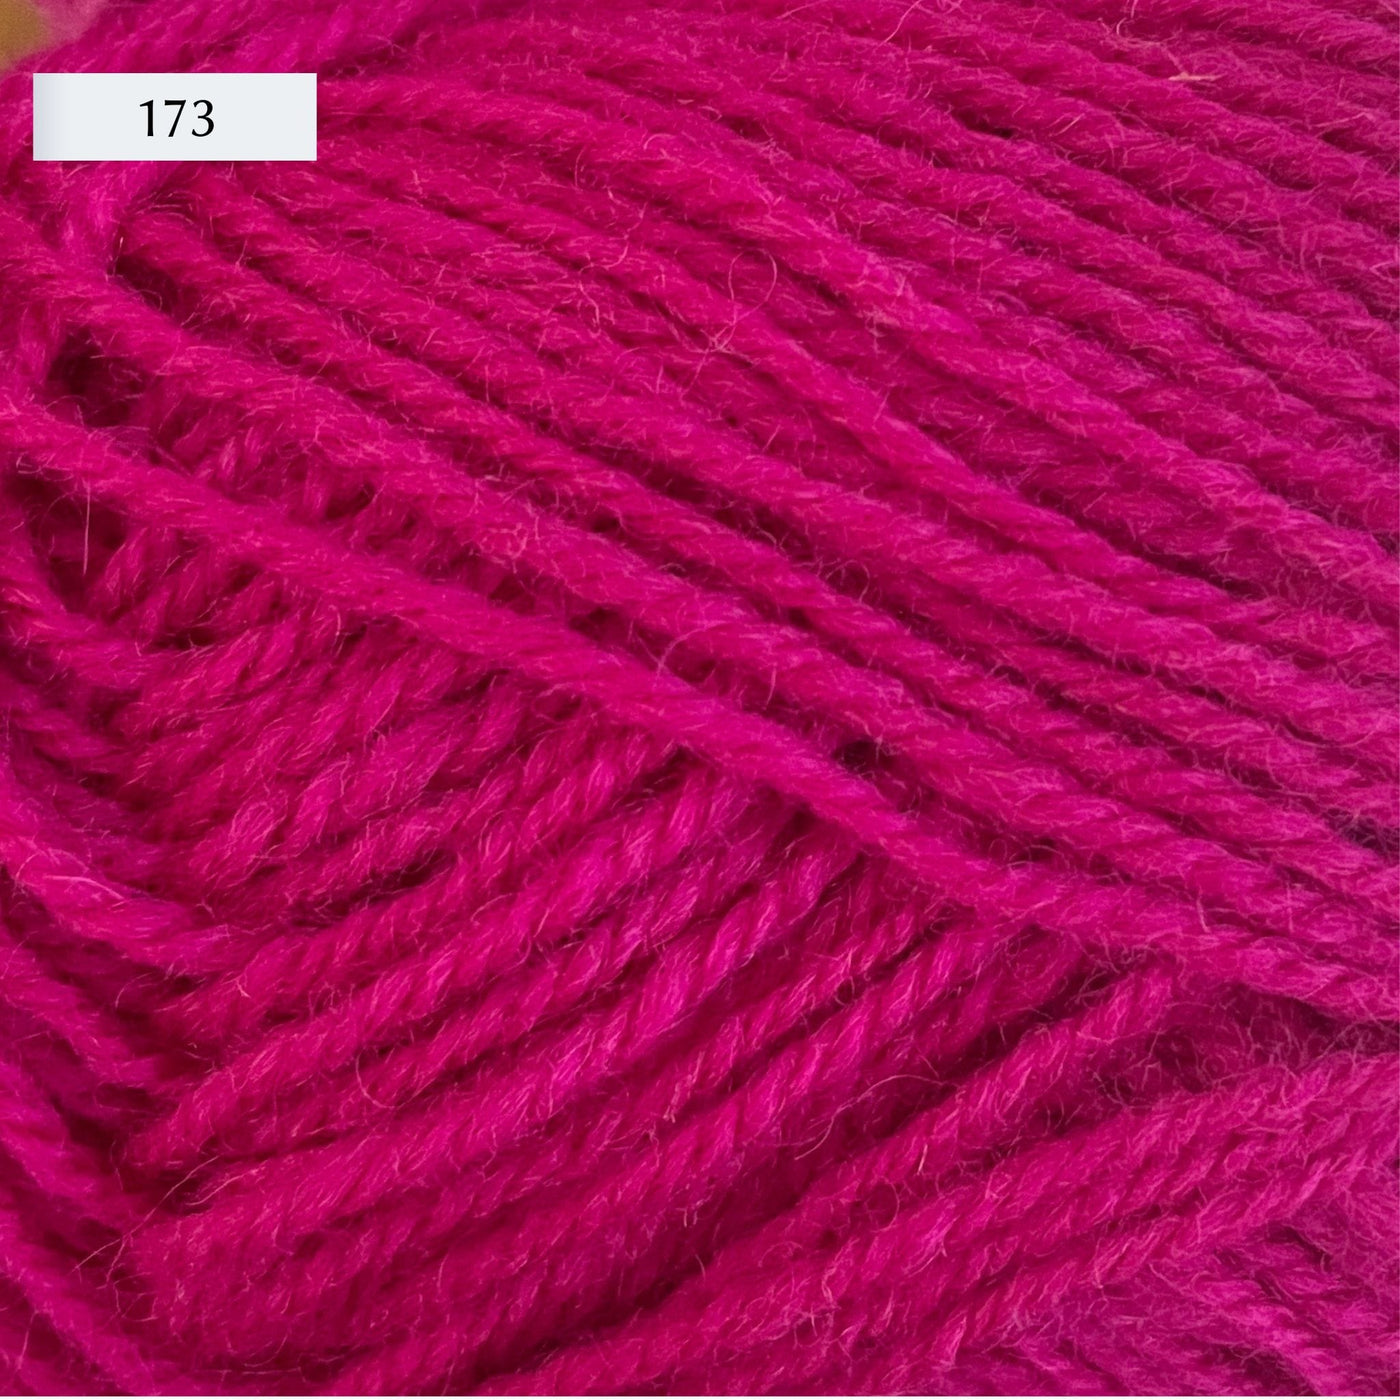 Rauma Strikkegarn, DK weight yarn, in color 173, fuschia pink